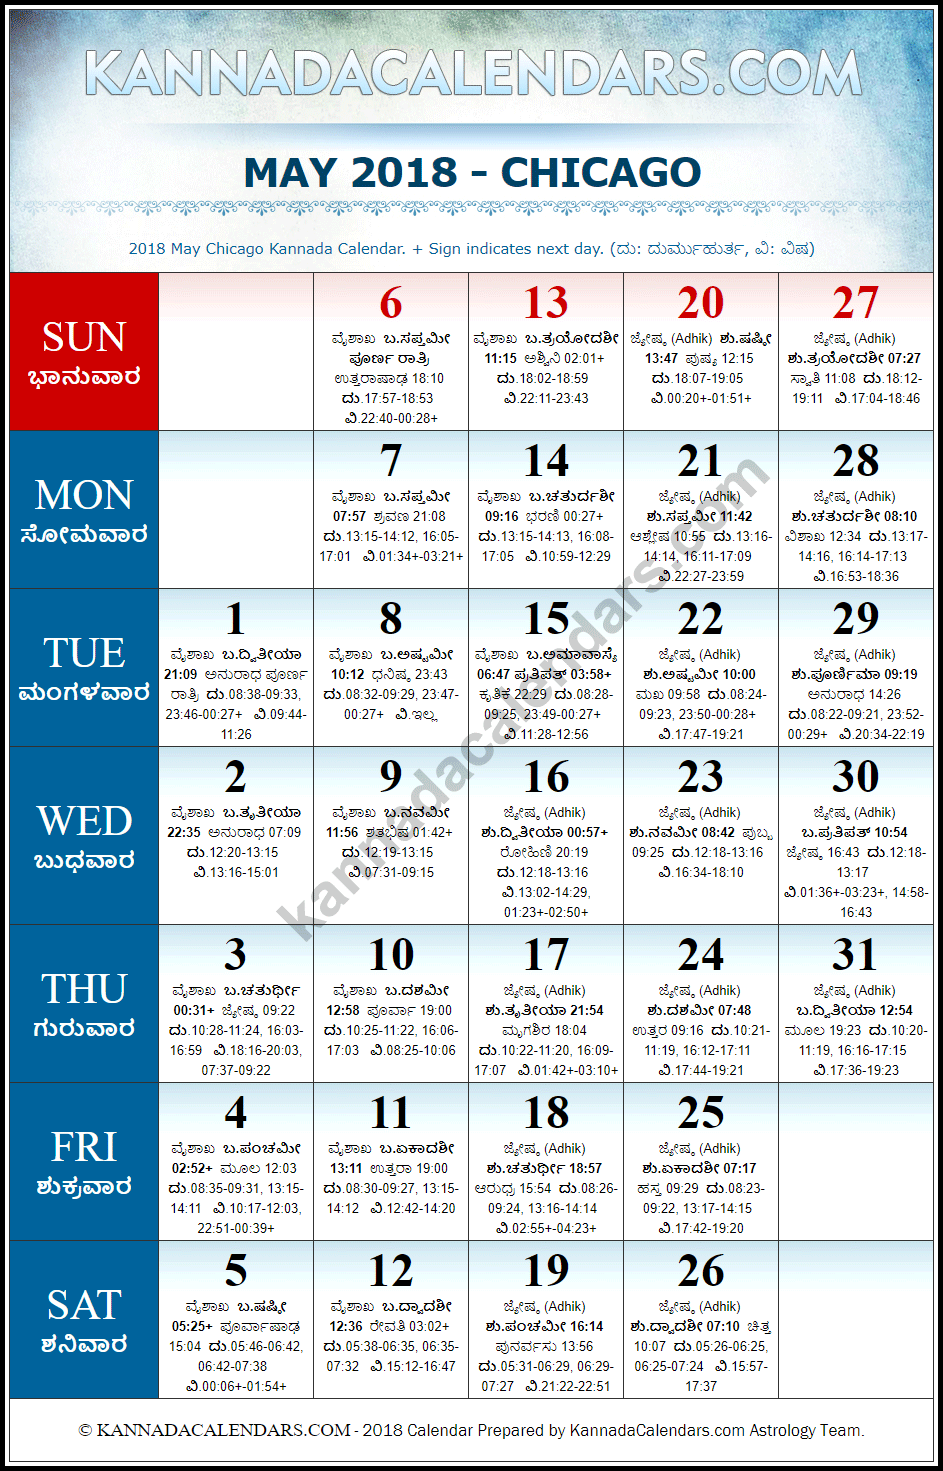 May 2018 Kannada Calendar for Chicago, USA